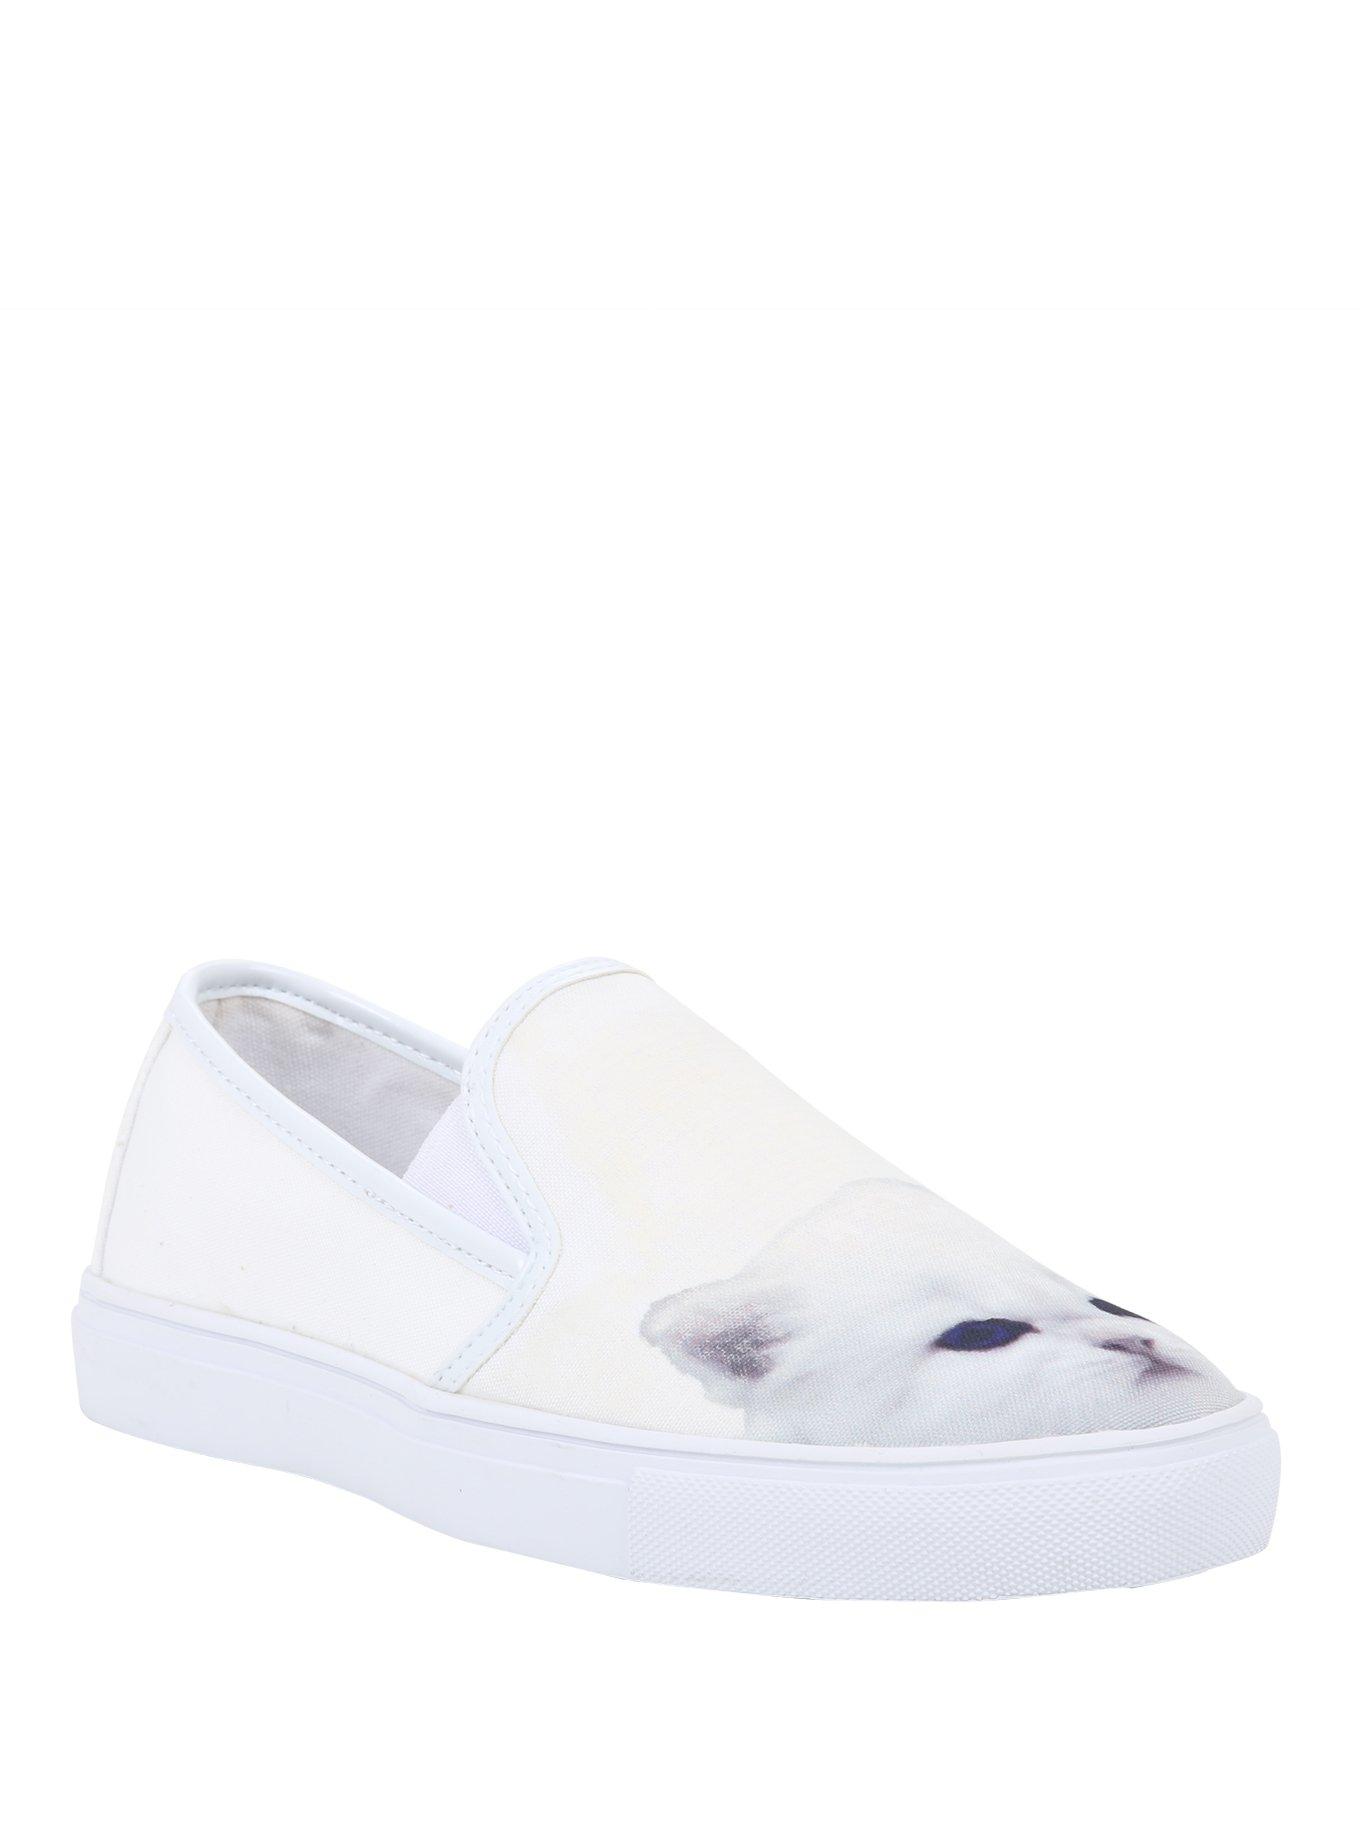 YRU Chill Kitty Slip-On Sneakers, WHITE, hi-res